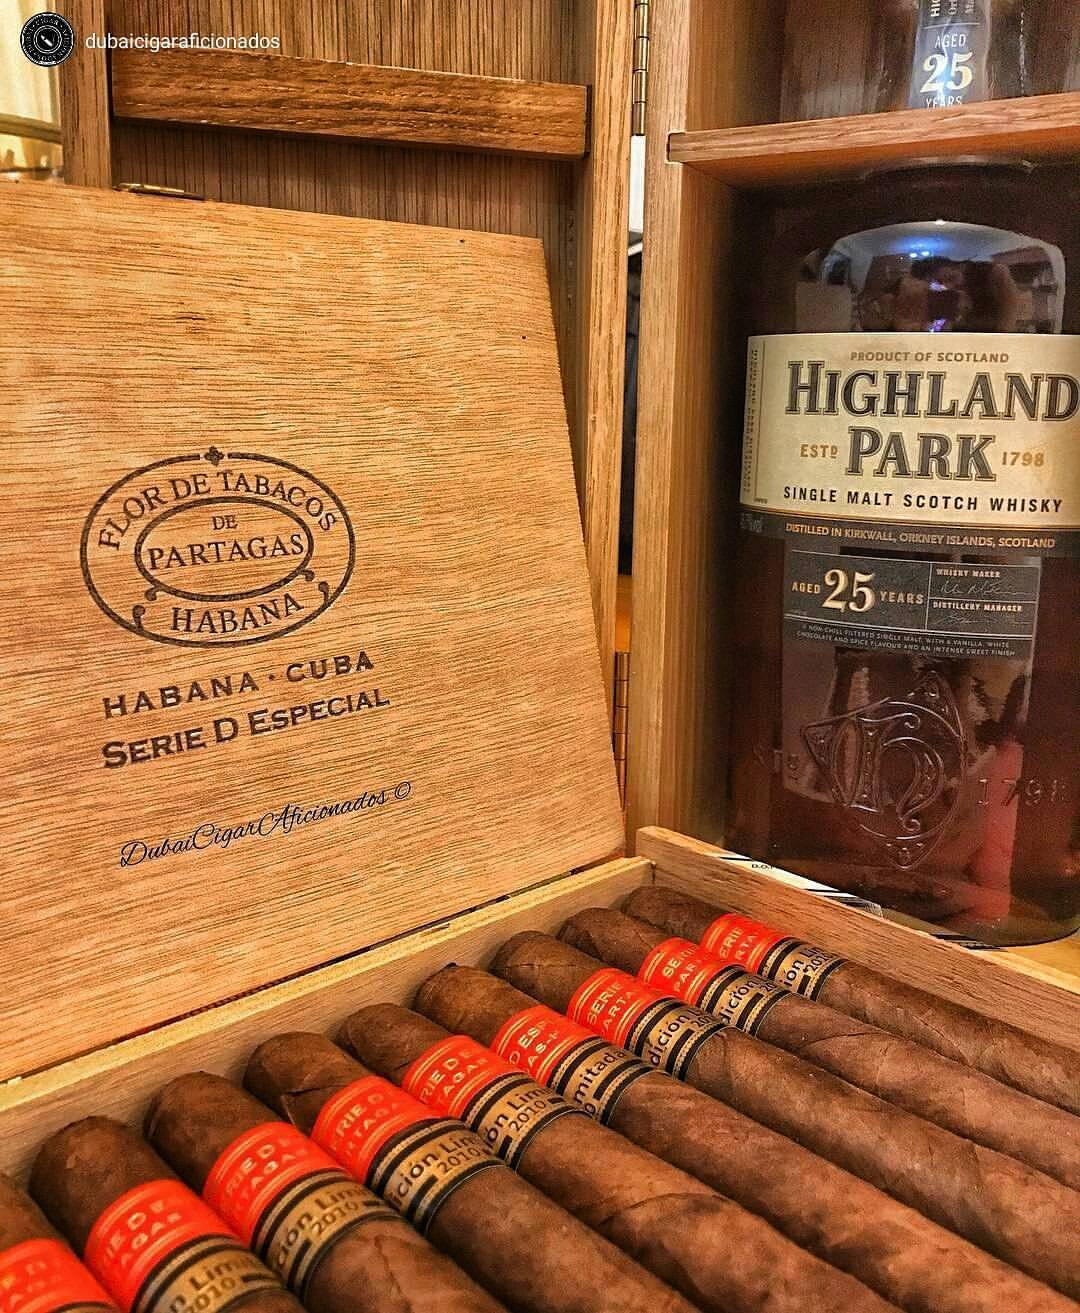 👌
#HighlandPark
#Partagas
#ScotchSundays
#Repost 📸 from @dubaicigaraficionados
WWW.CIGARSANDWHISKEYS.COM
Like 👍, Repost 🔃, Tag 🔖 Follow 👣 Us & Subscribe ✍...